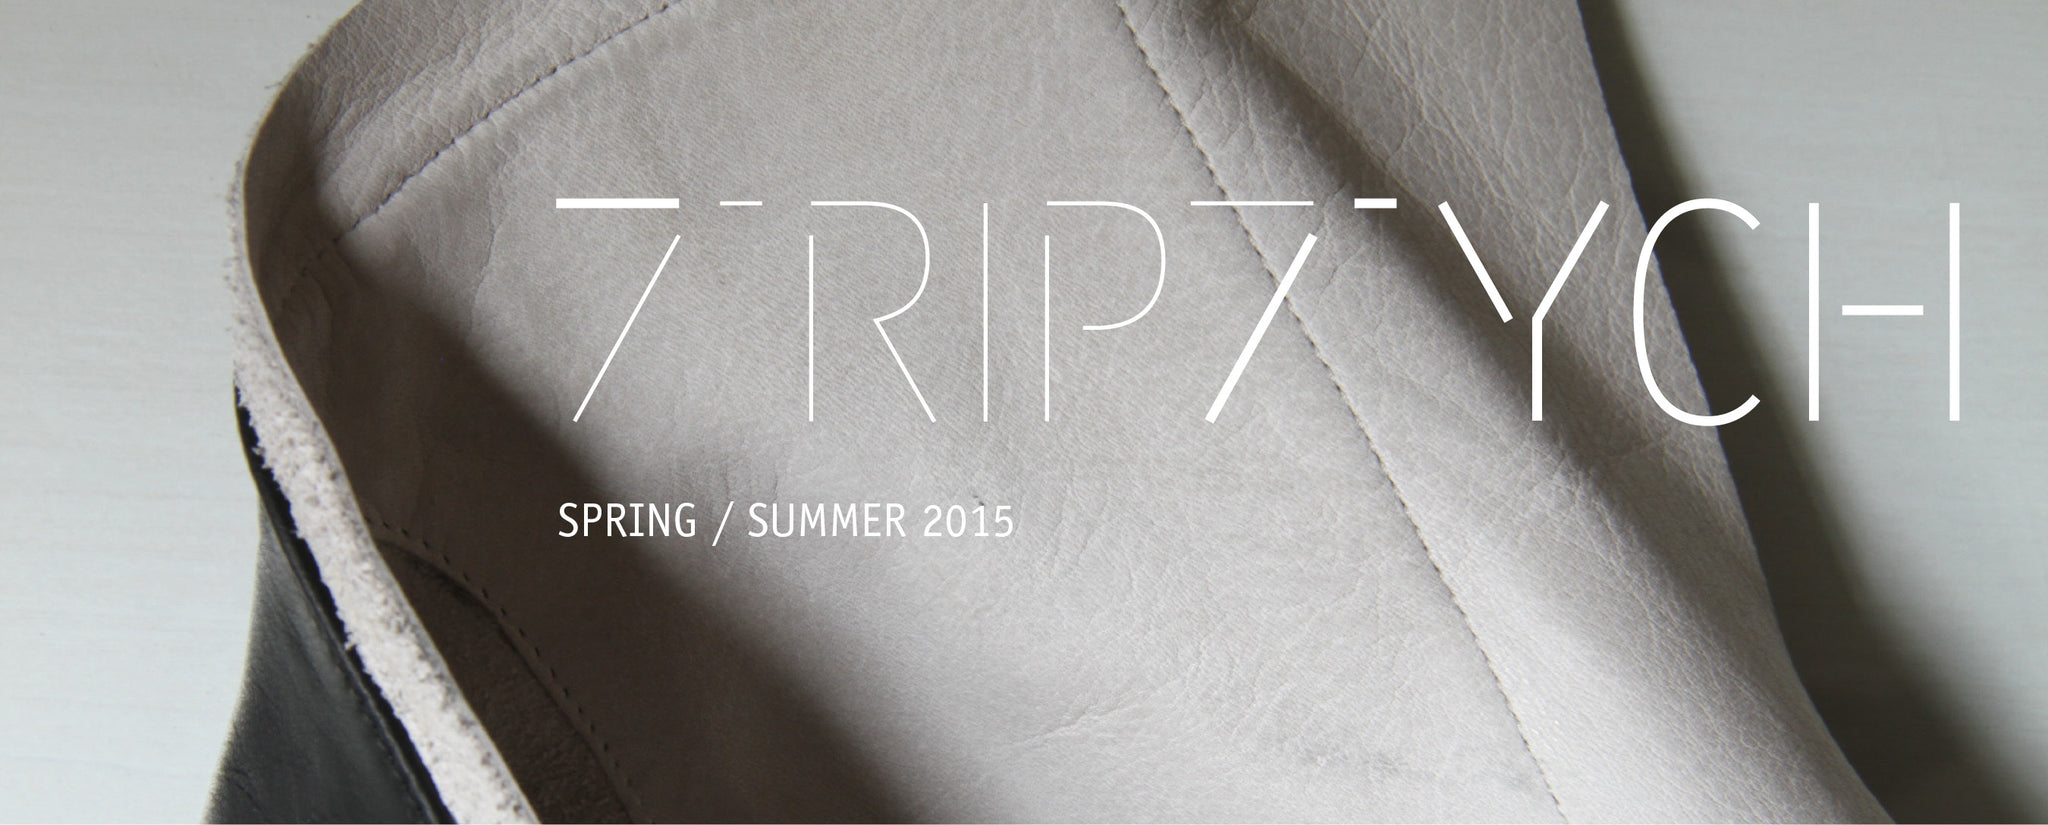 TRIPTYCH brand launch invitation 